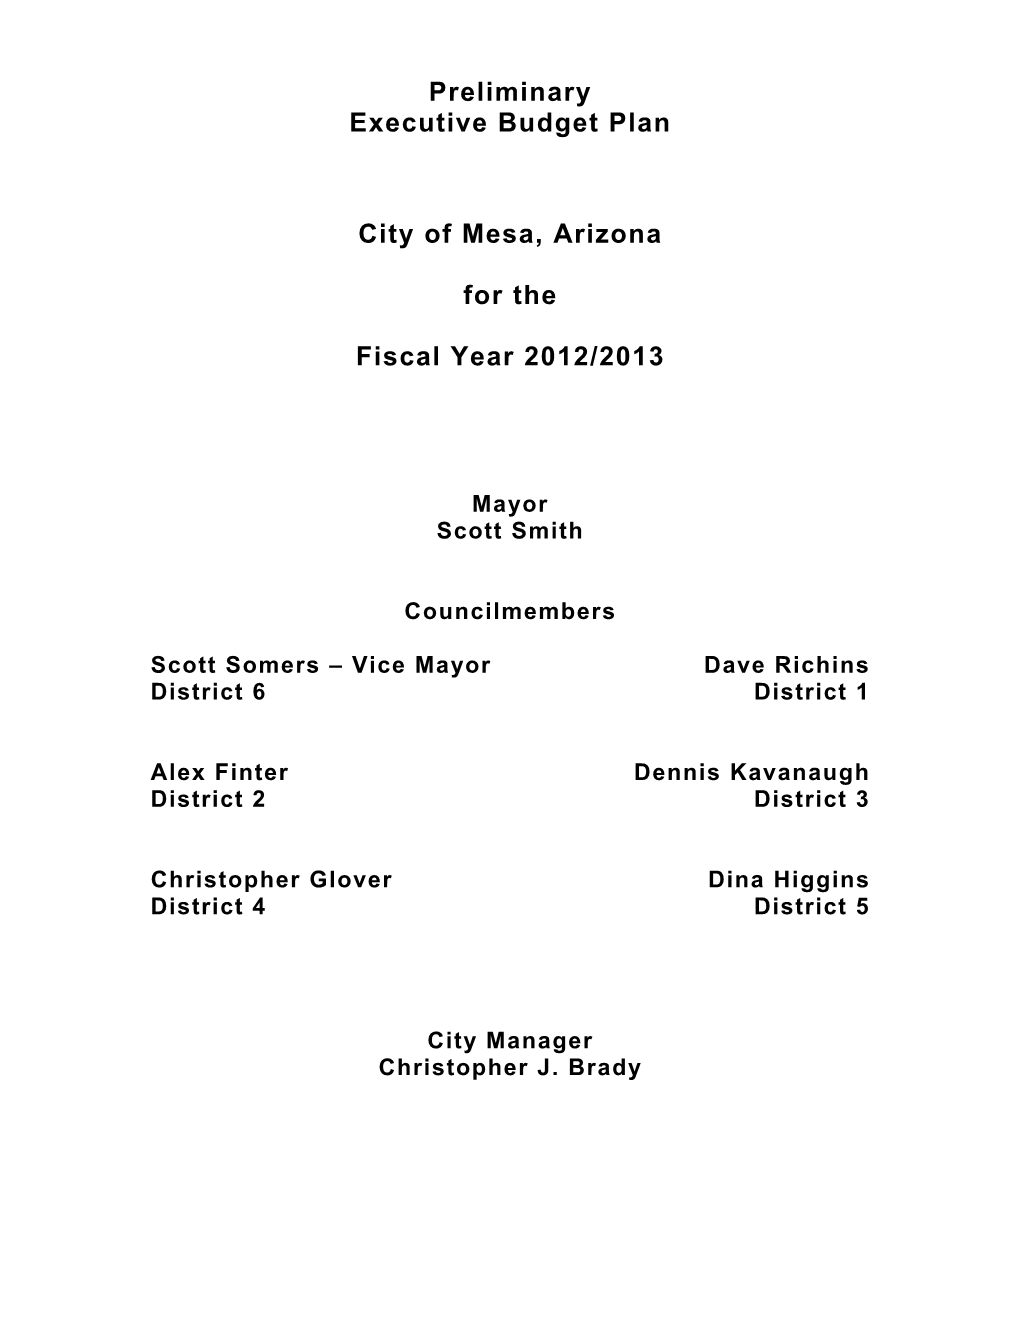 City of Mesa Preliminary Executive Budget Plan